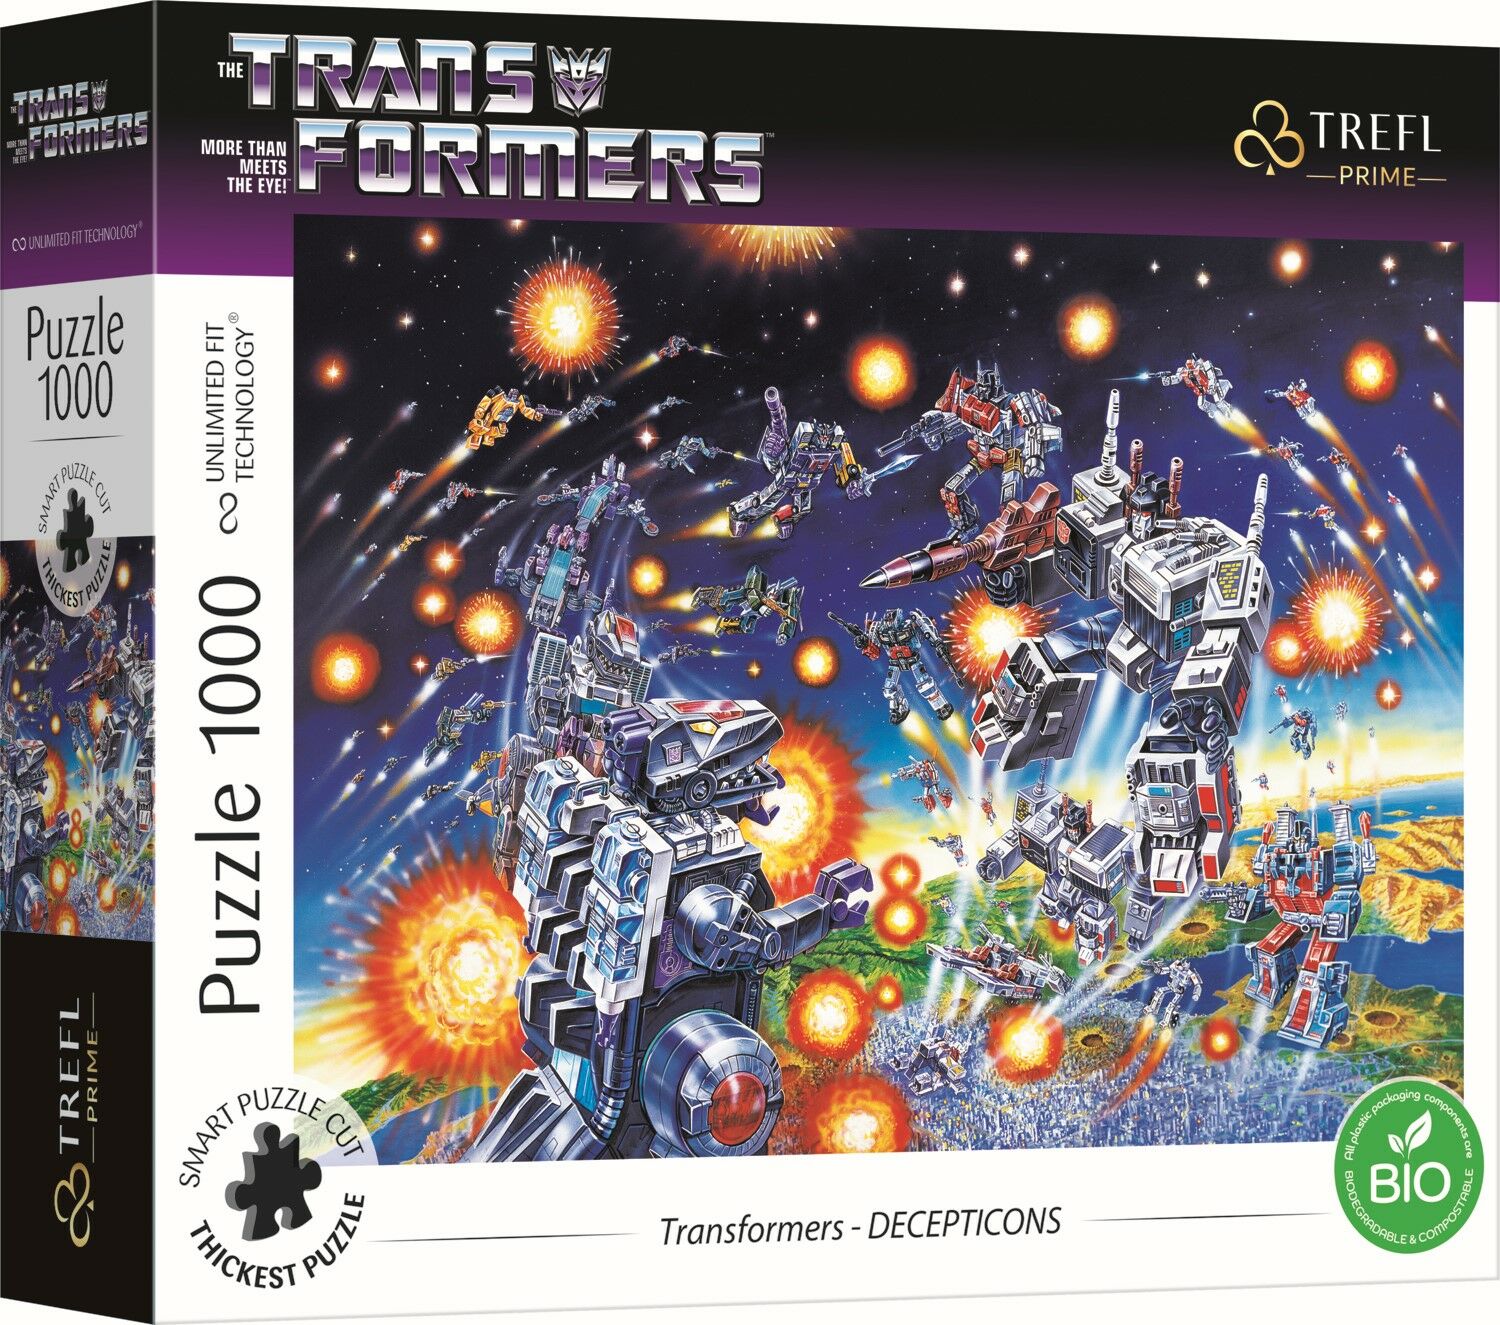 Trefl Prime UFT Transformers Decepticons Puzzle 1000 Teile von Transformers